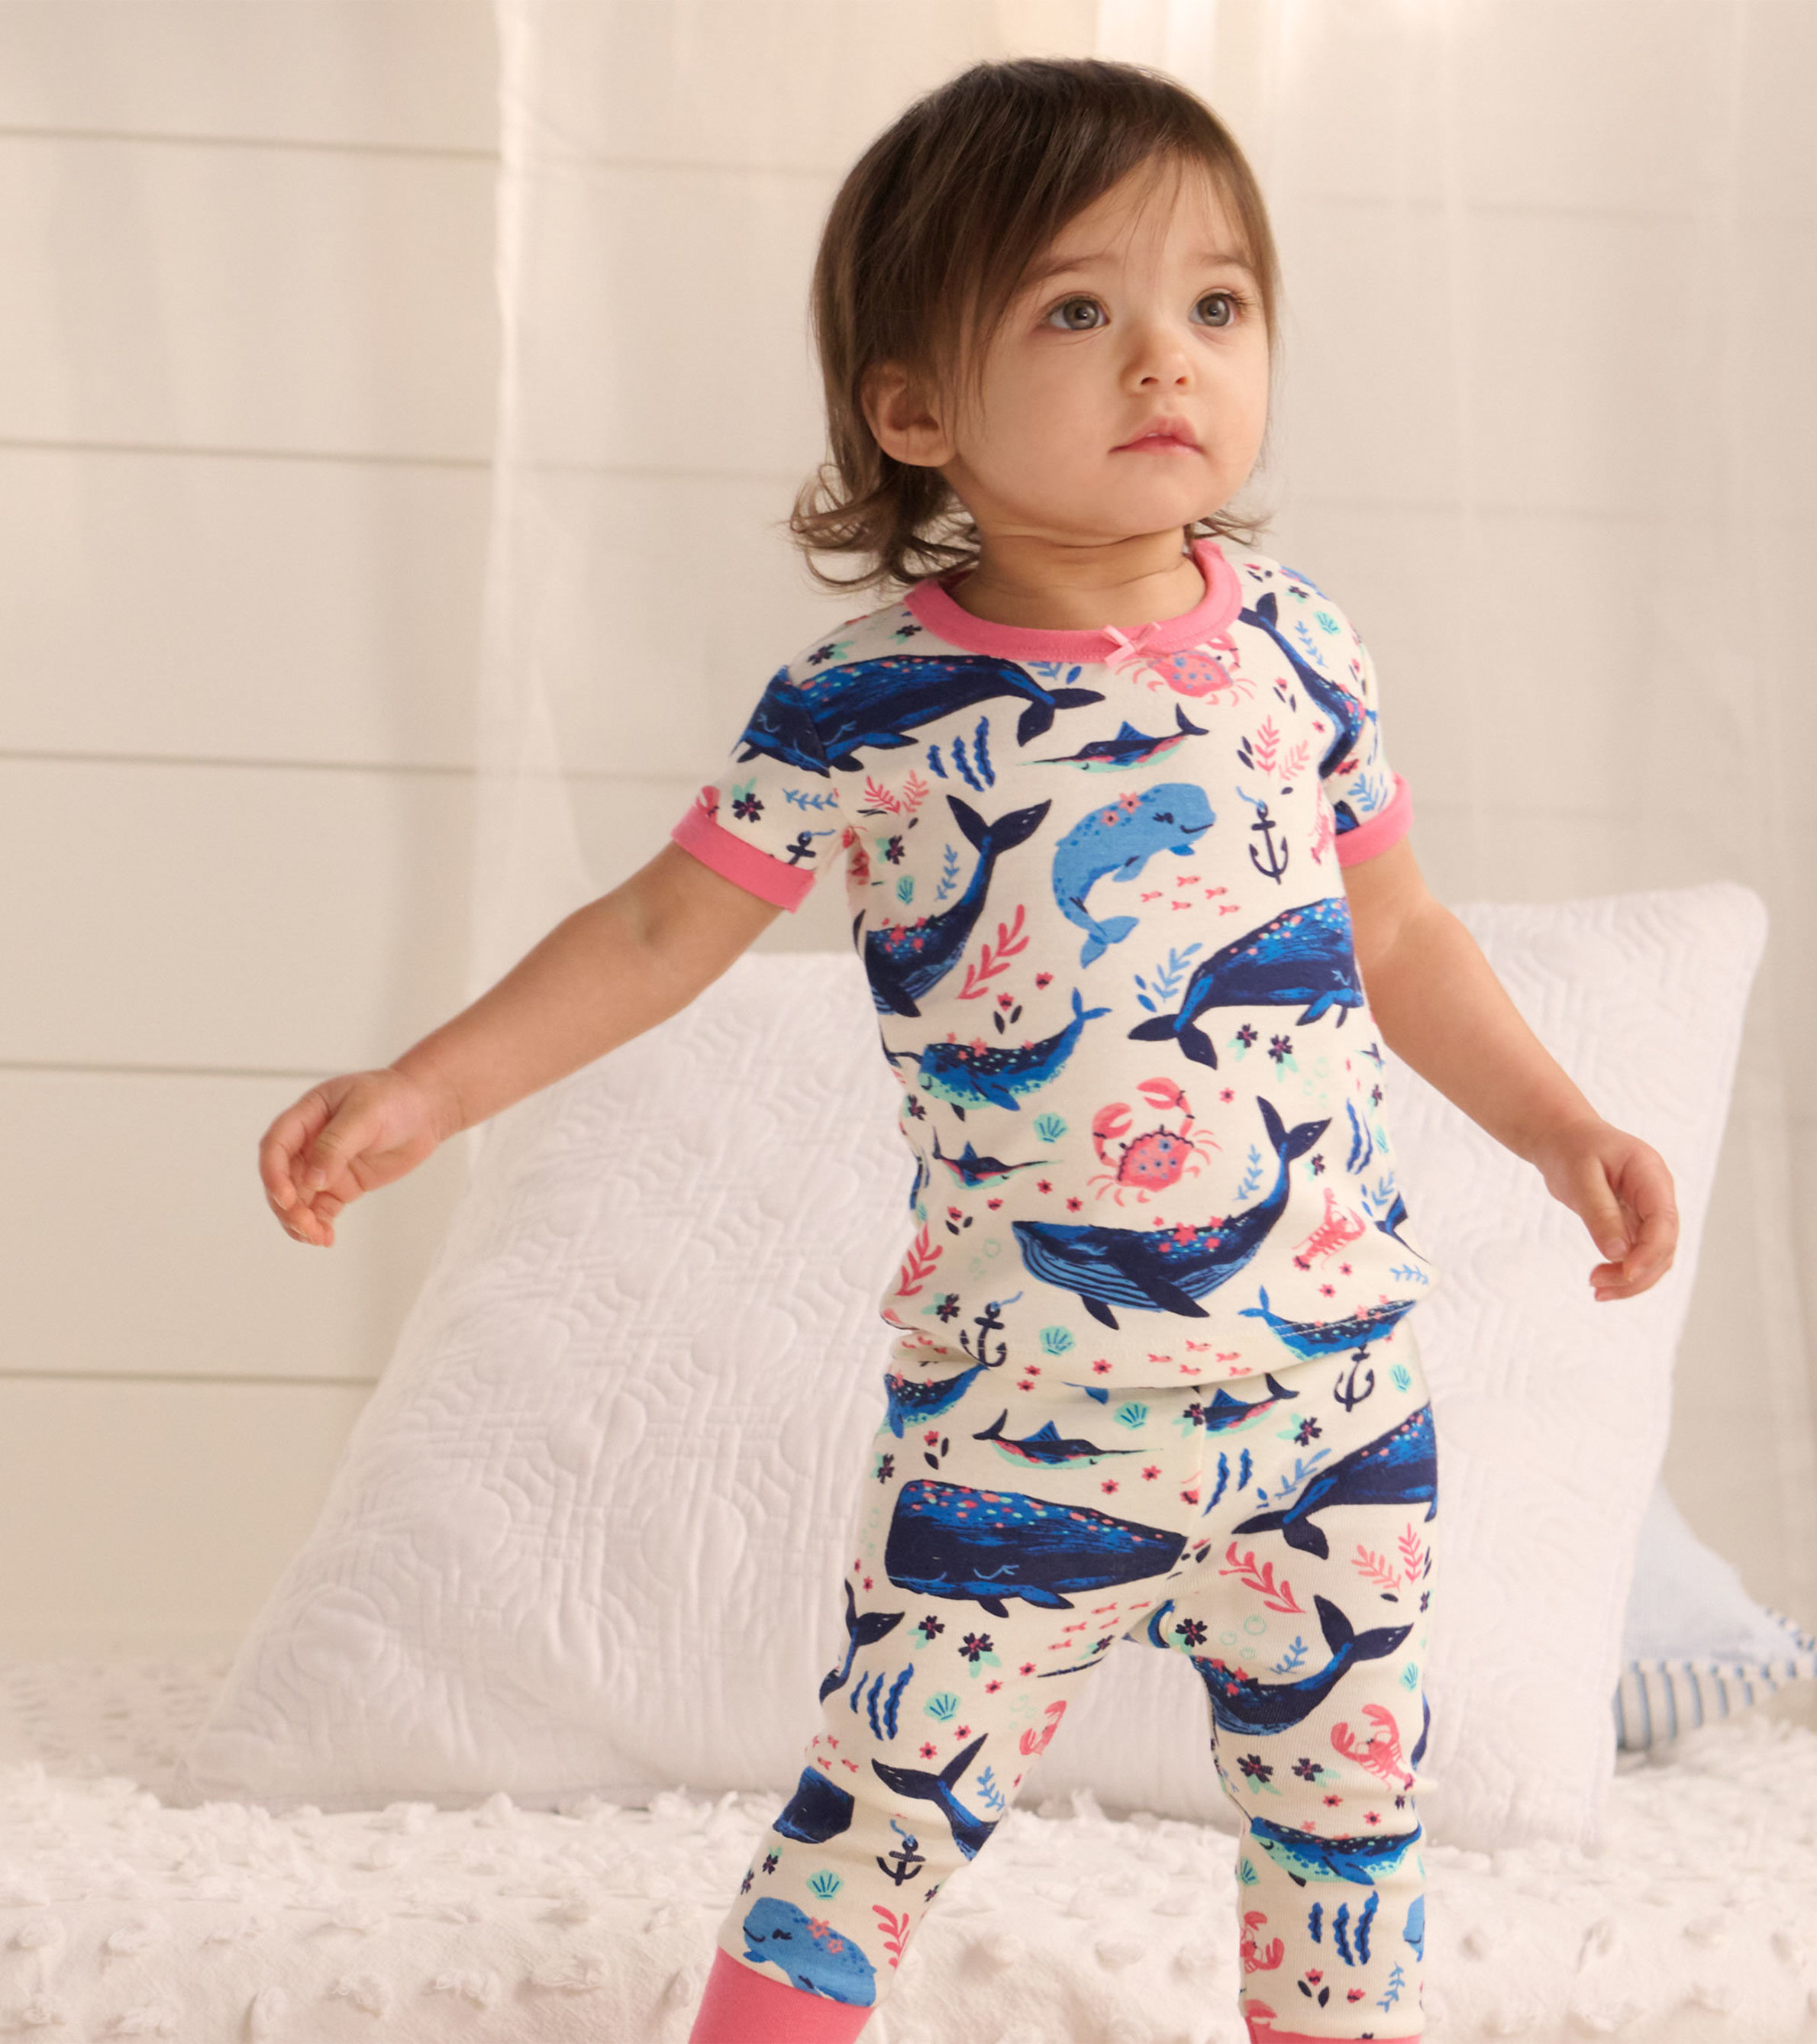 Pyjamas pour bébé